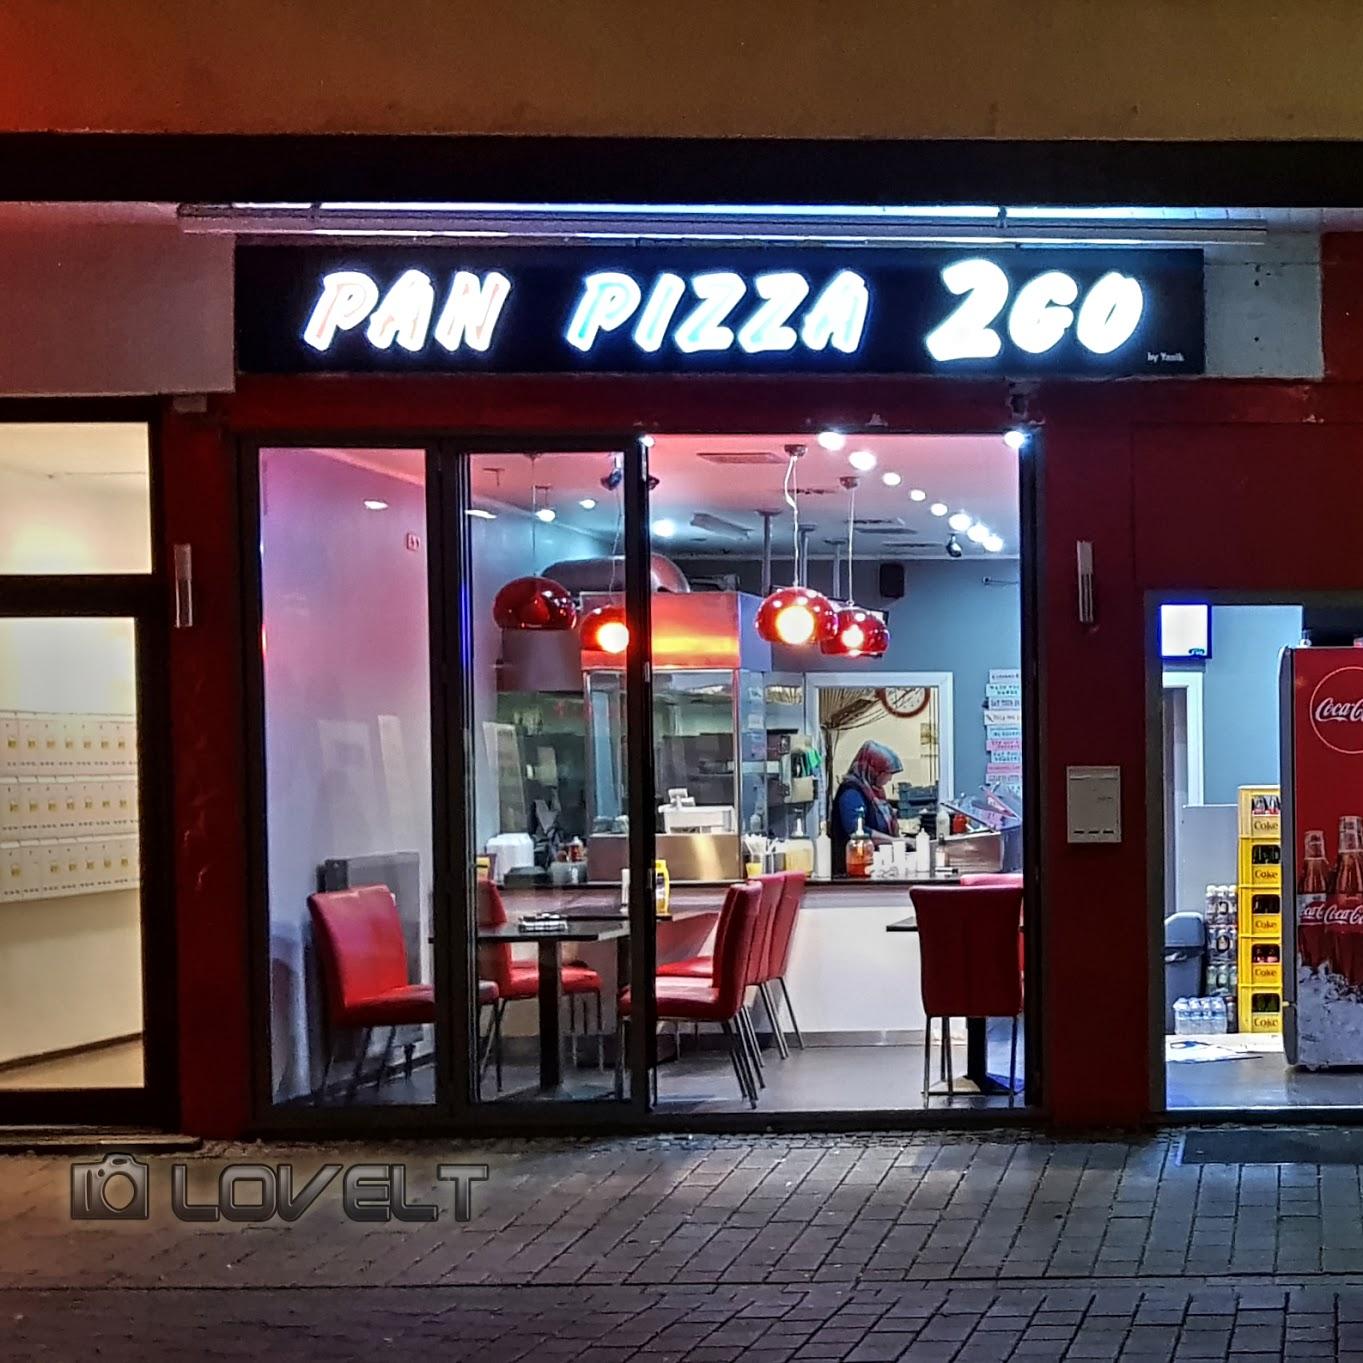 Restaurant "Pan Pizza 2go" in Dortmund